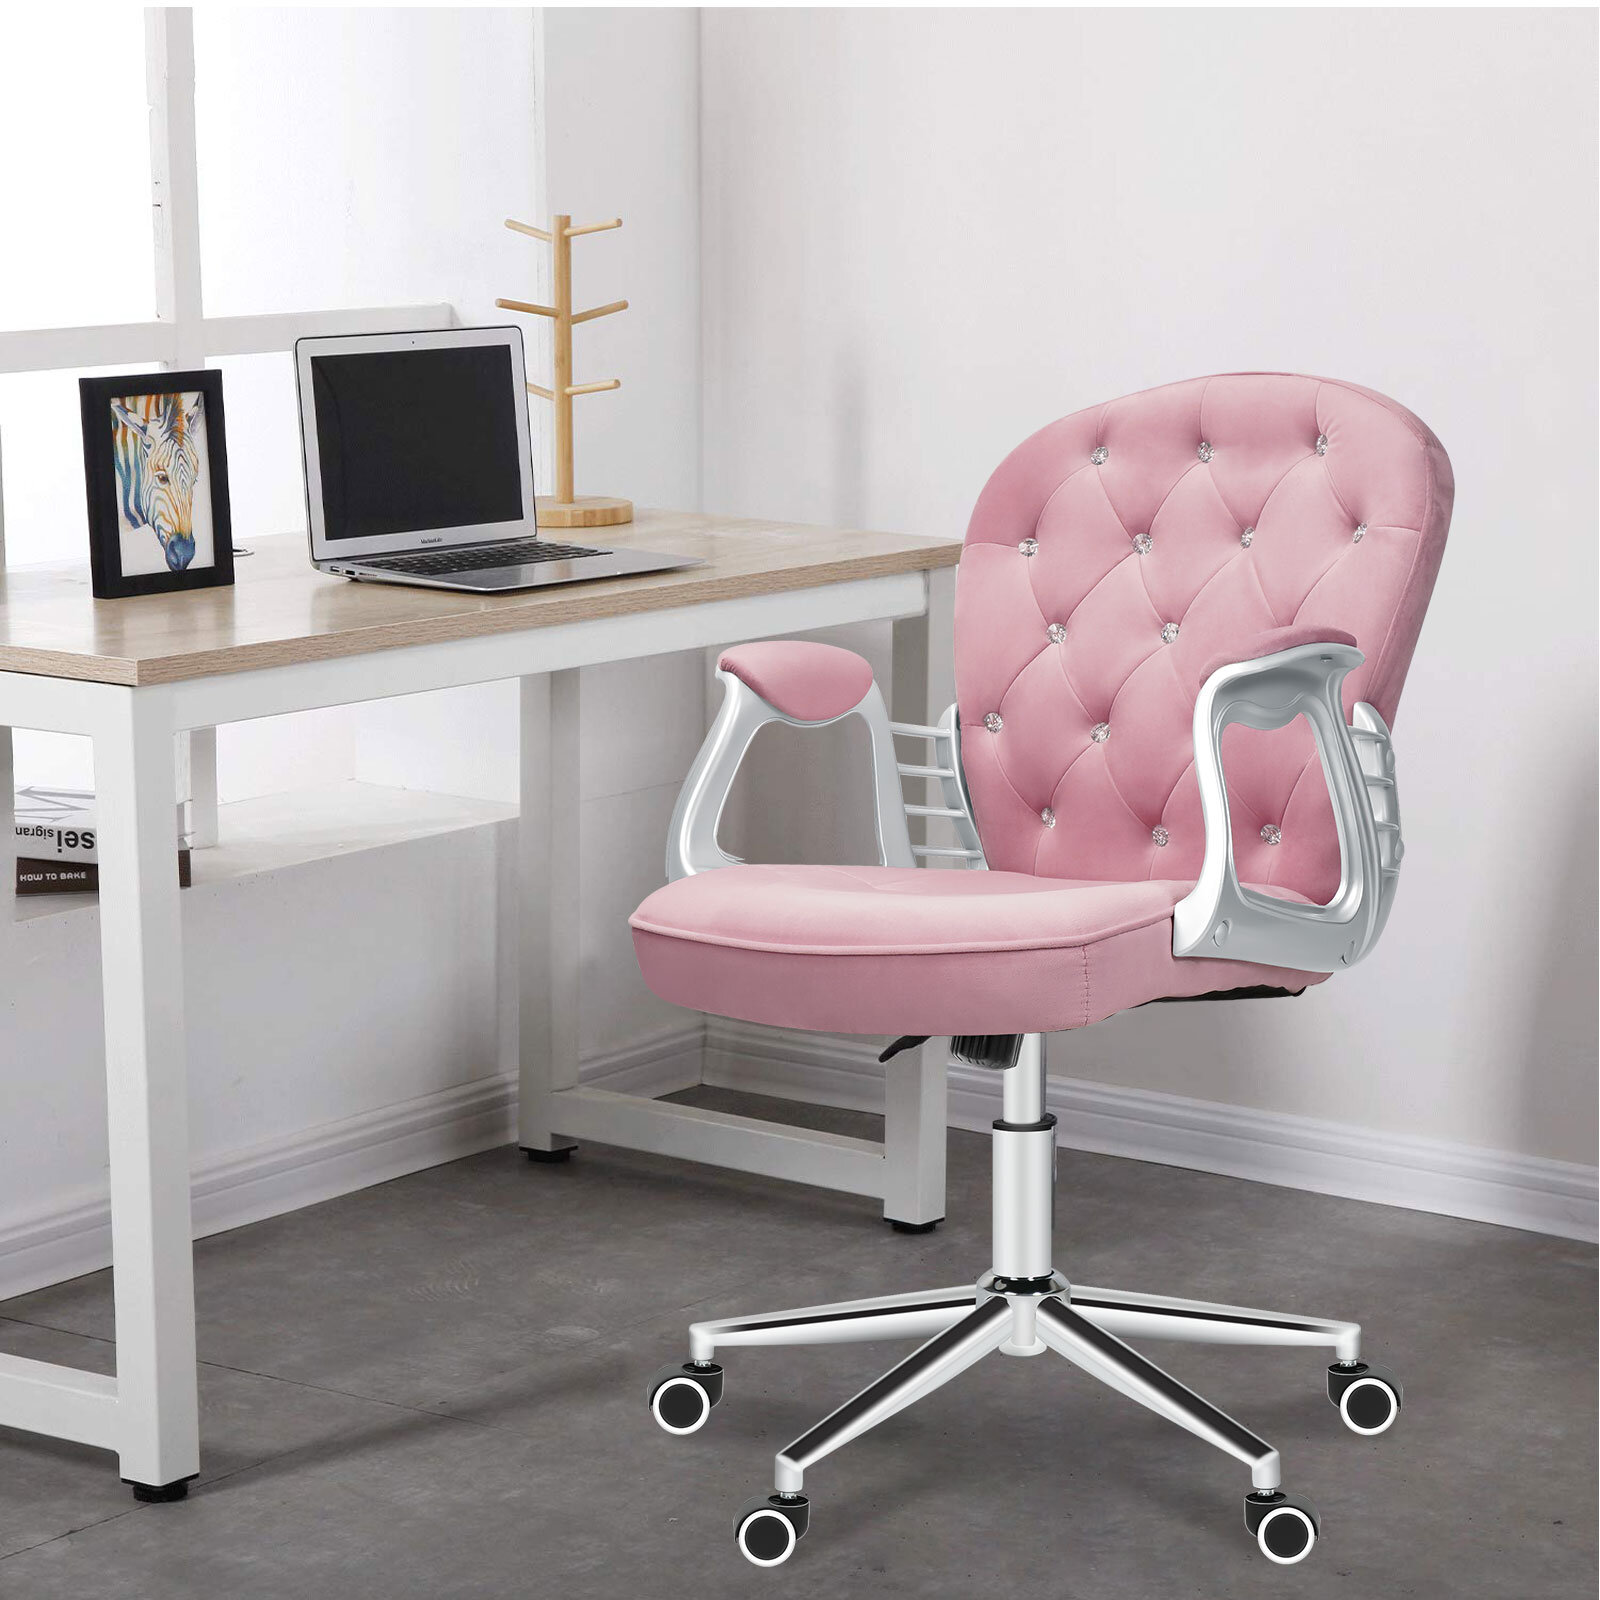 Mercer41 Capirano Desk Chair 